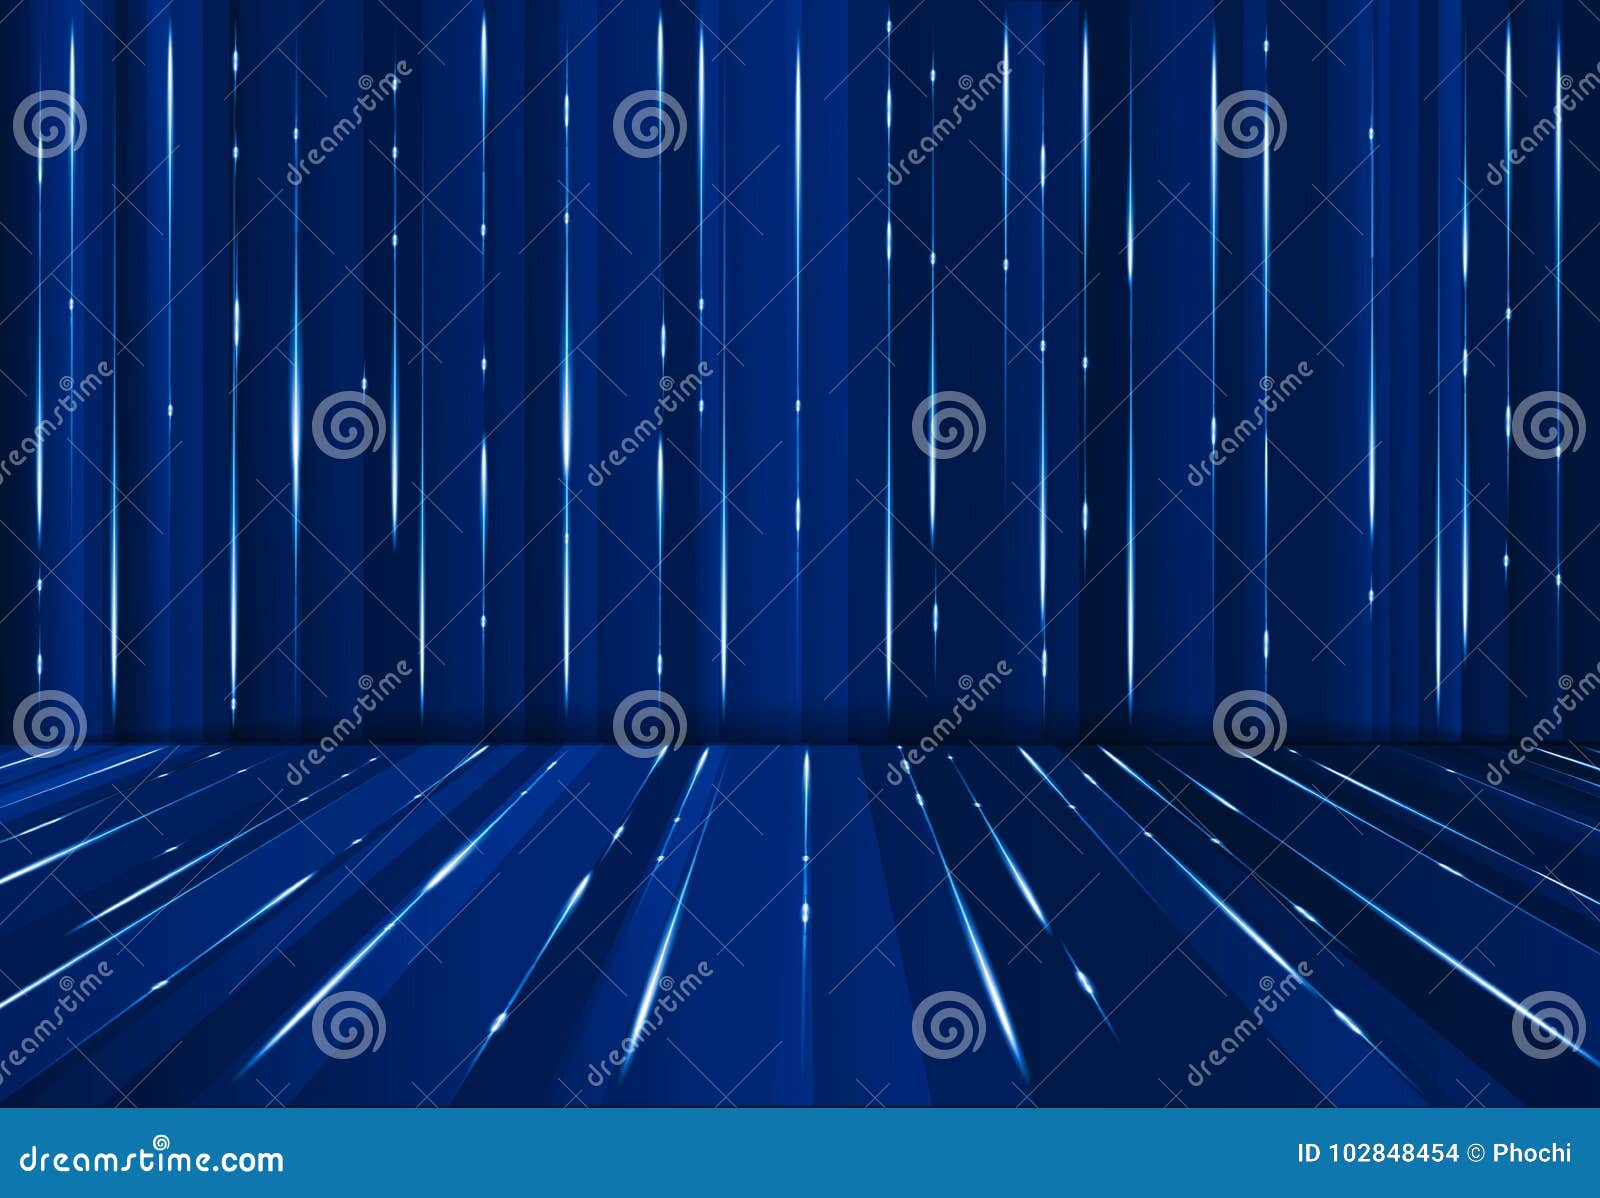 abstrac digital lazer line science fiction matrix dark blue perspective background